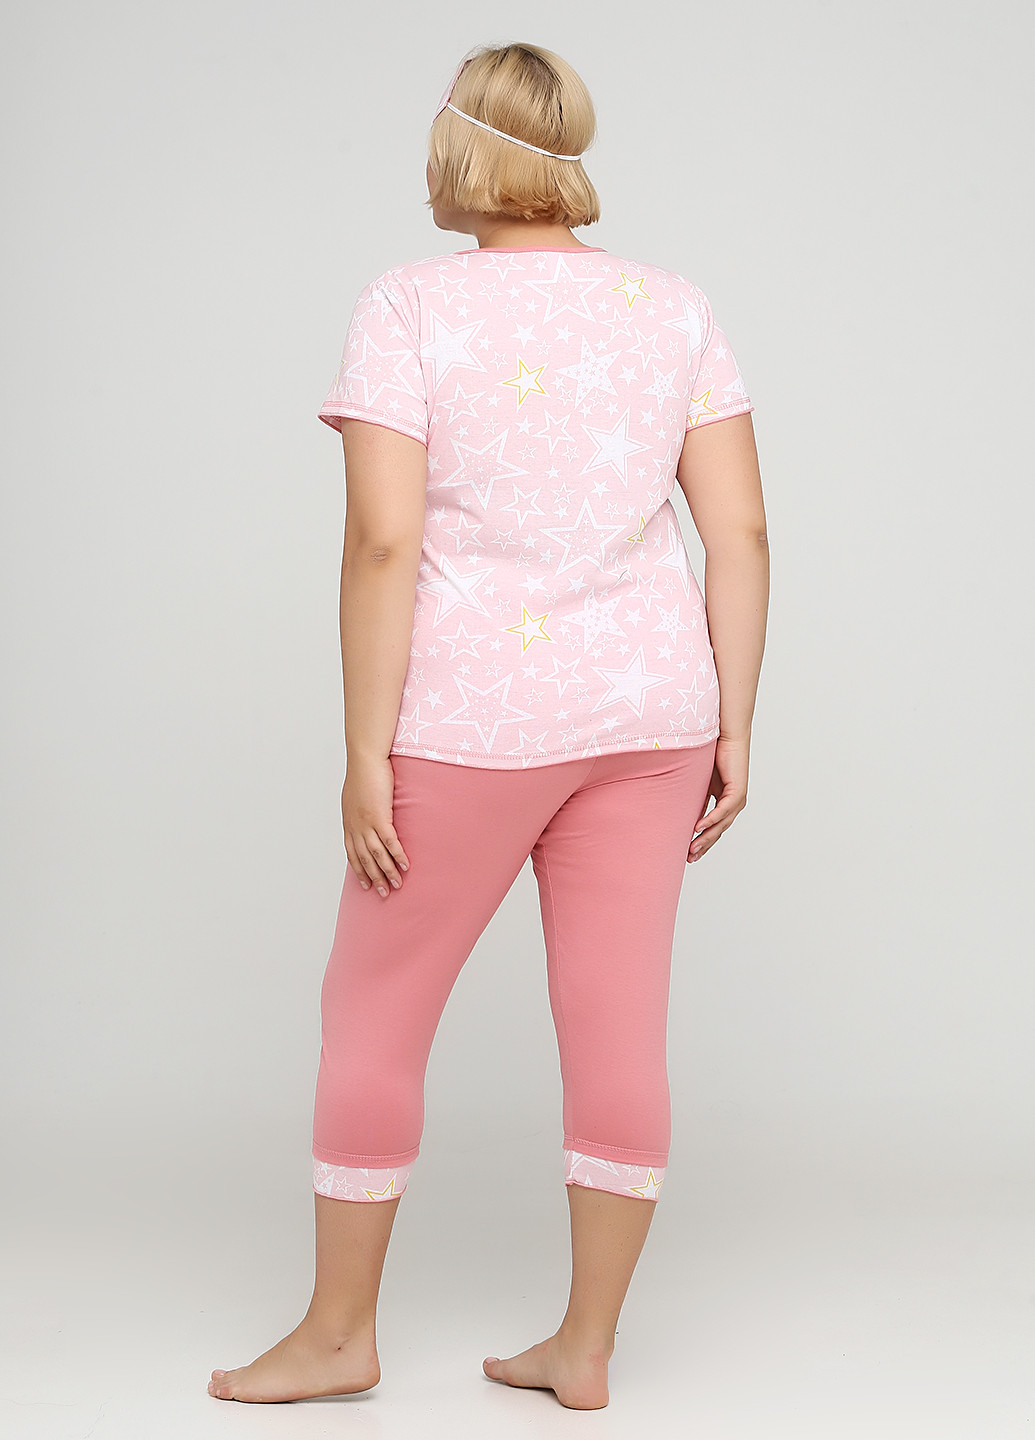 Рожева всесезон піжама (маска для сну, футболка, капрі) футболка + капрі Трикомир